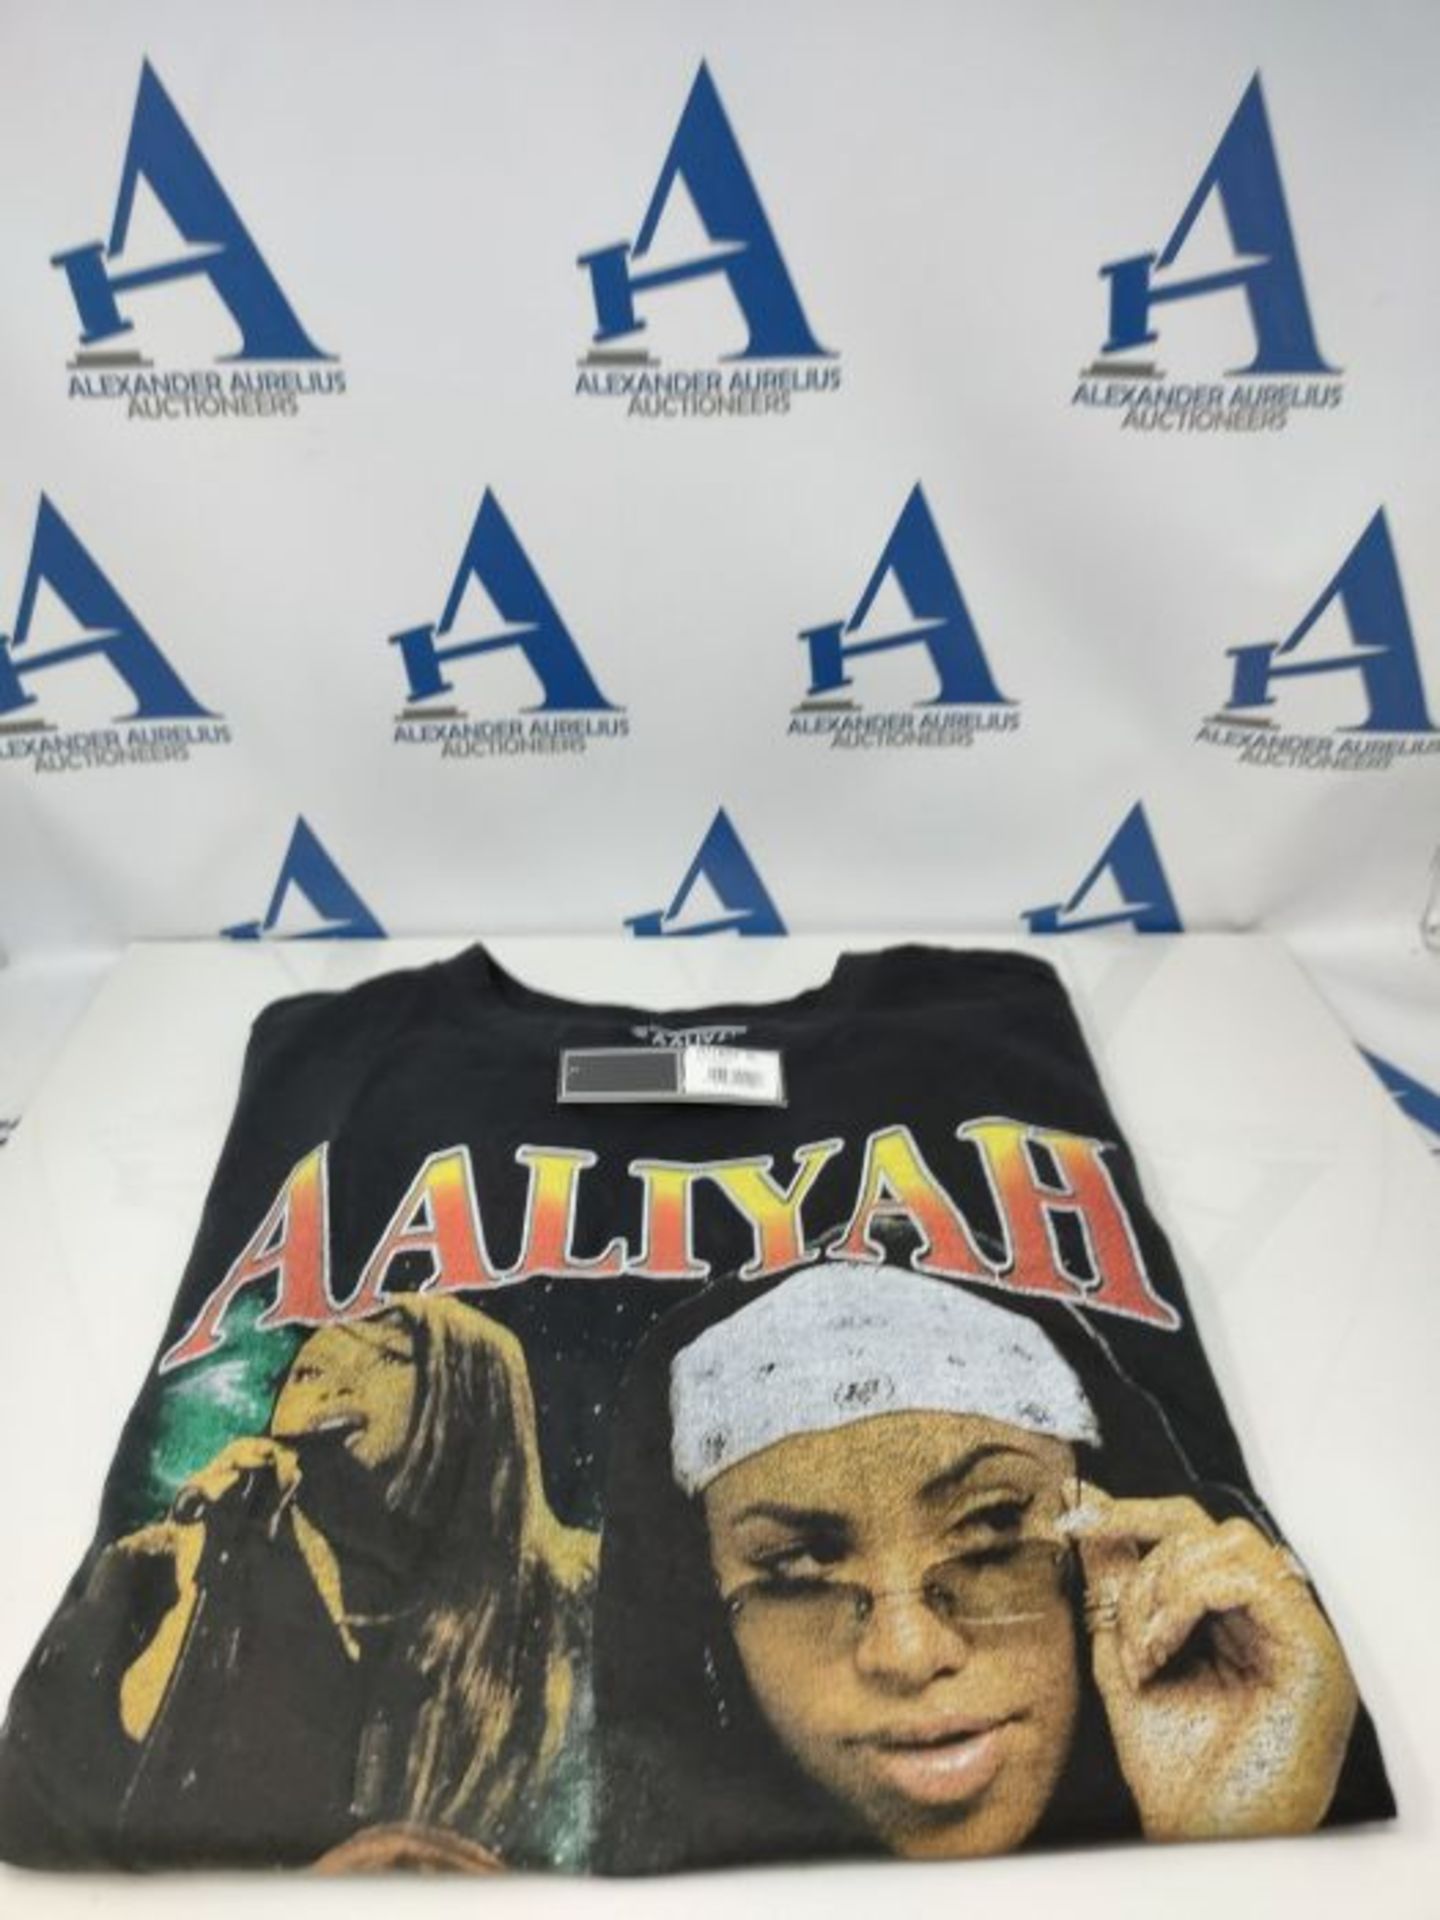 Mister Tee Men's Aaliyah Retro Oversize Tee T-Shirt, Black, XL - Image 2 of 3